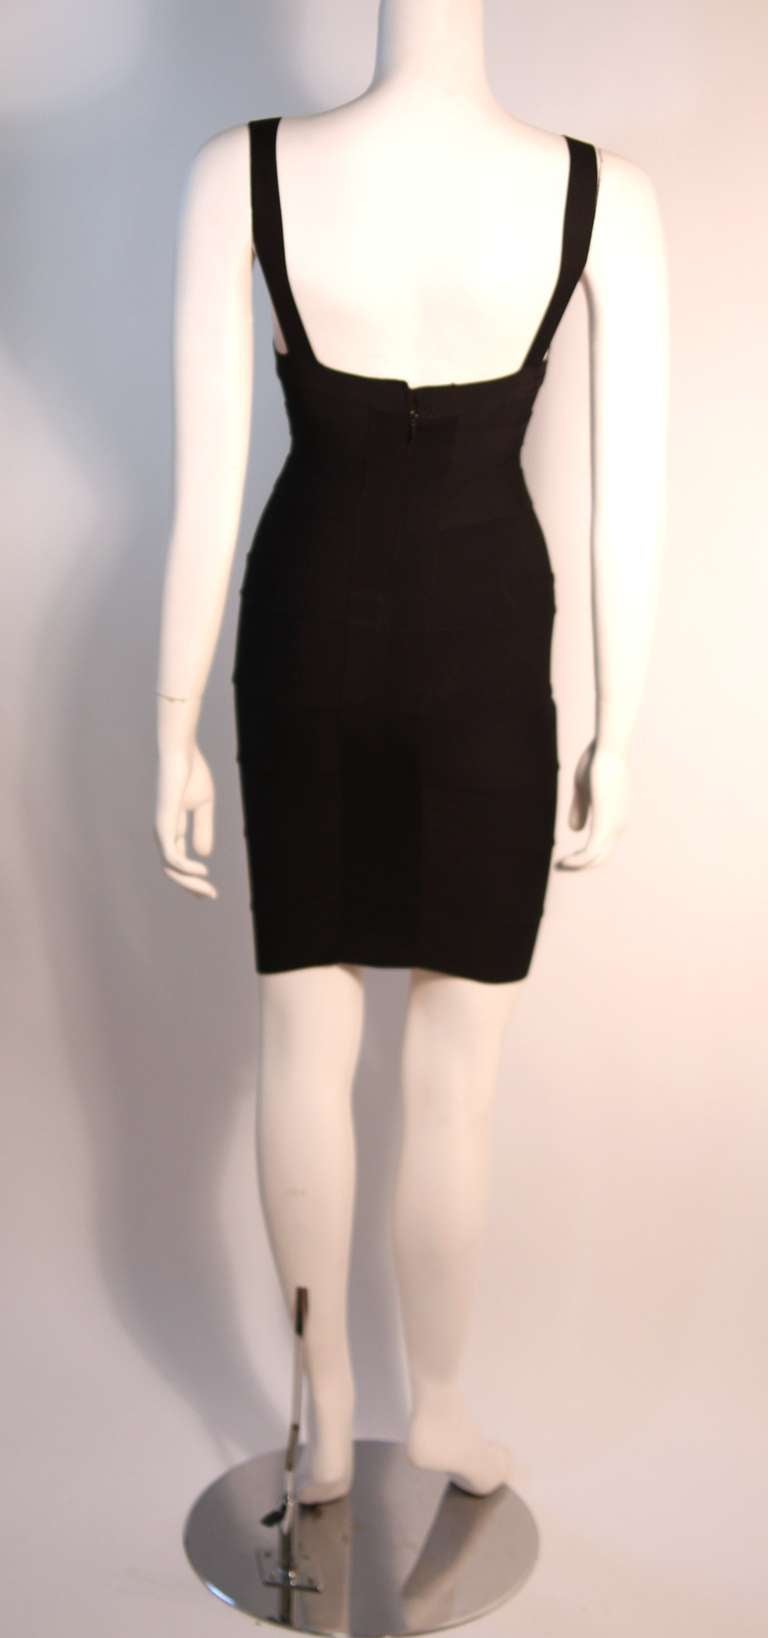 1990s Herve Leger Couture Shield Corset Design Bandage Dress at 1stdibs